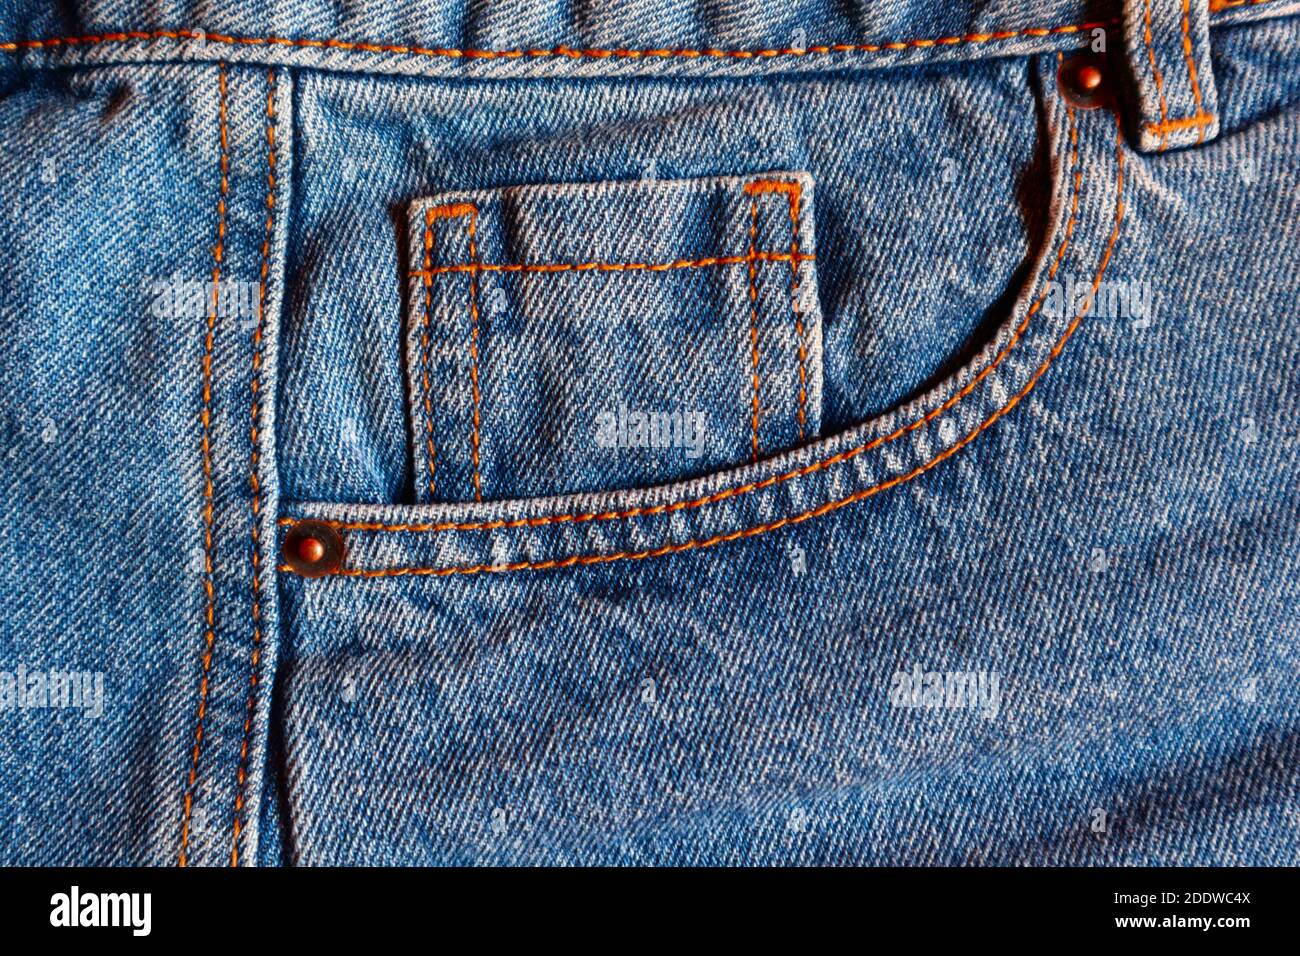 Blue jeans watch pocket close up, denim textile texture for wear ...